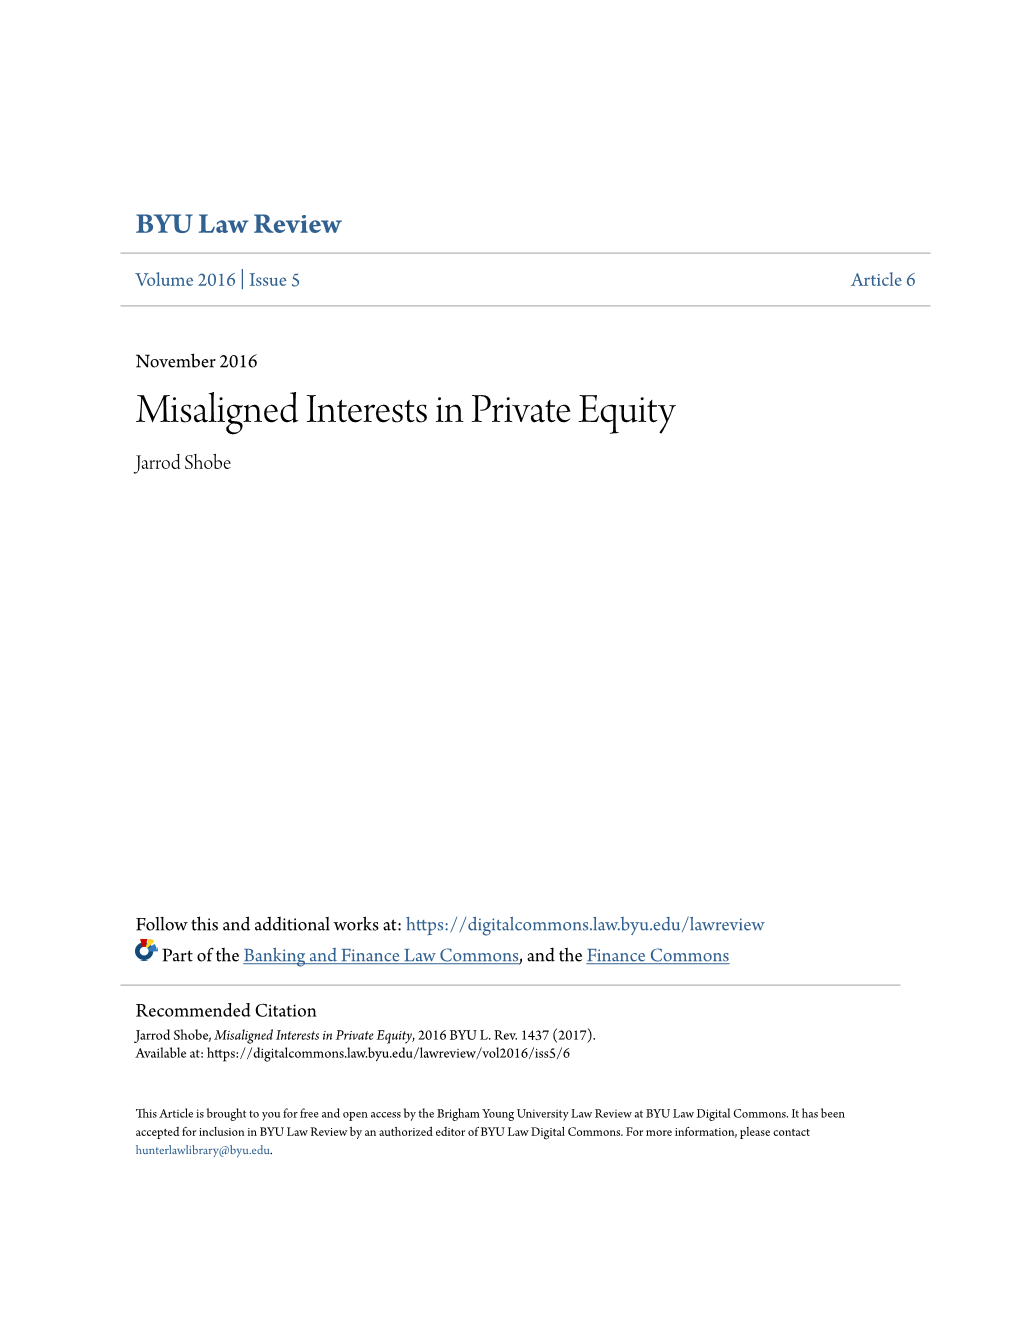 Misaligned Interests in Private Equity Jarrod Shobe